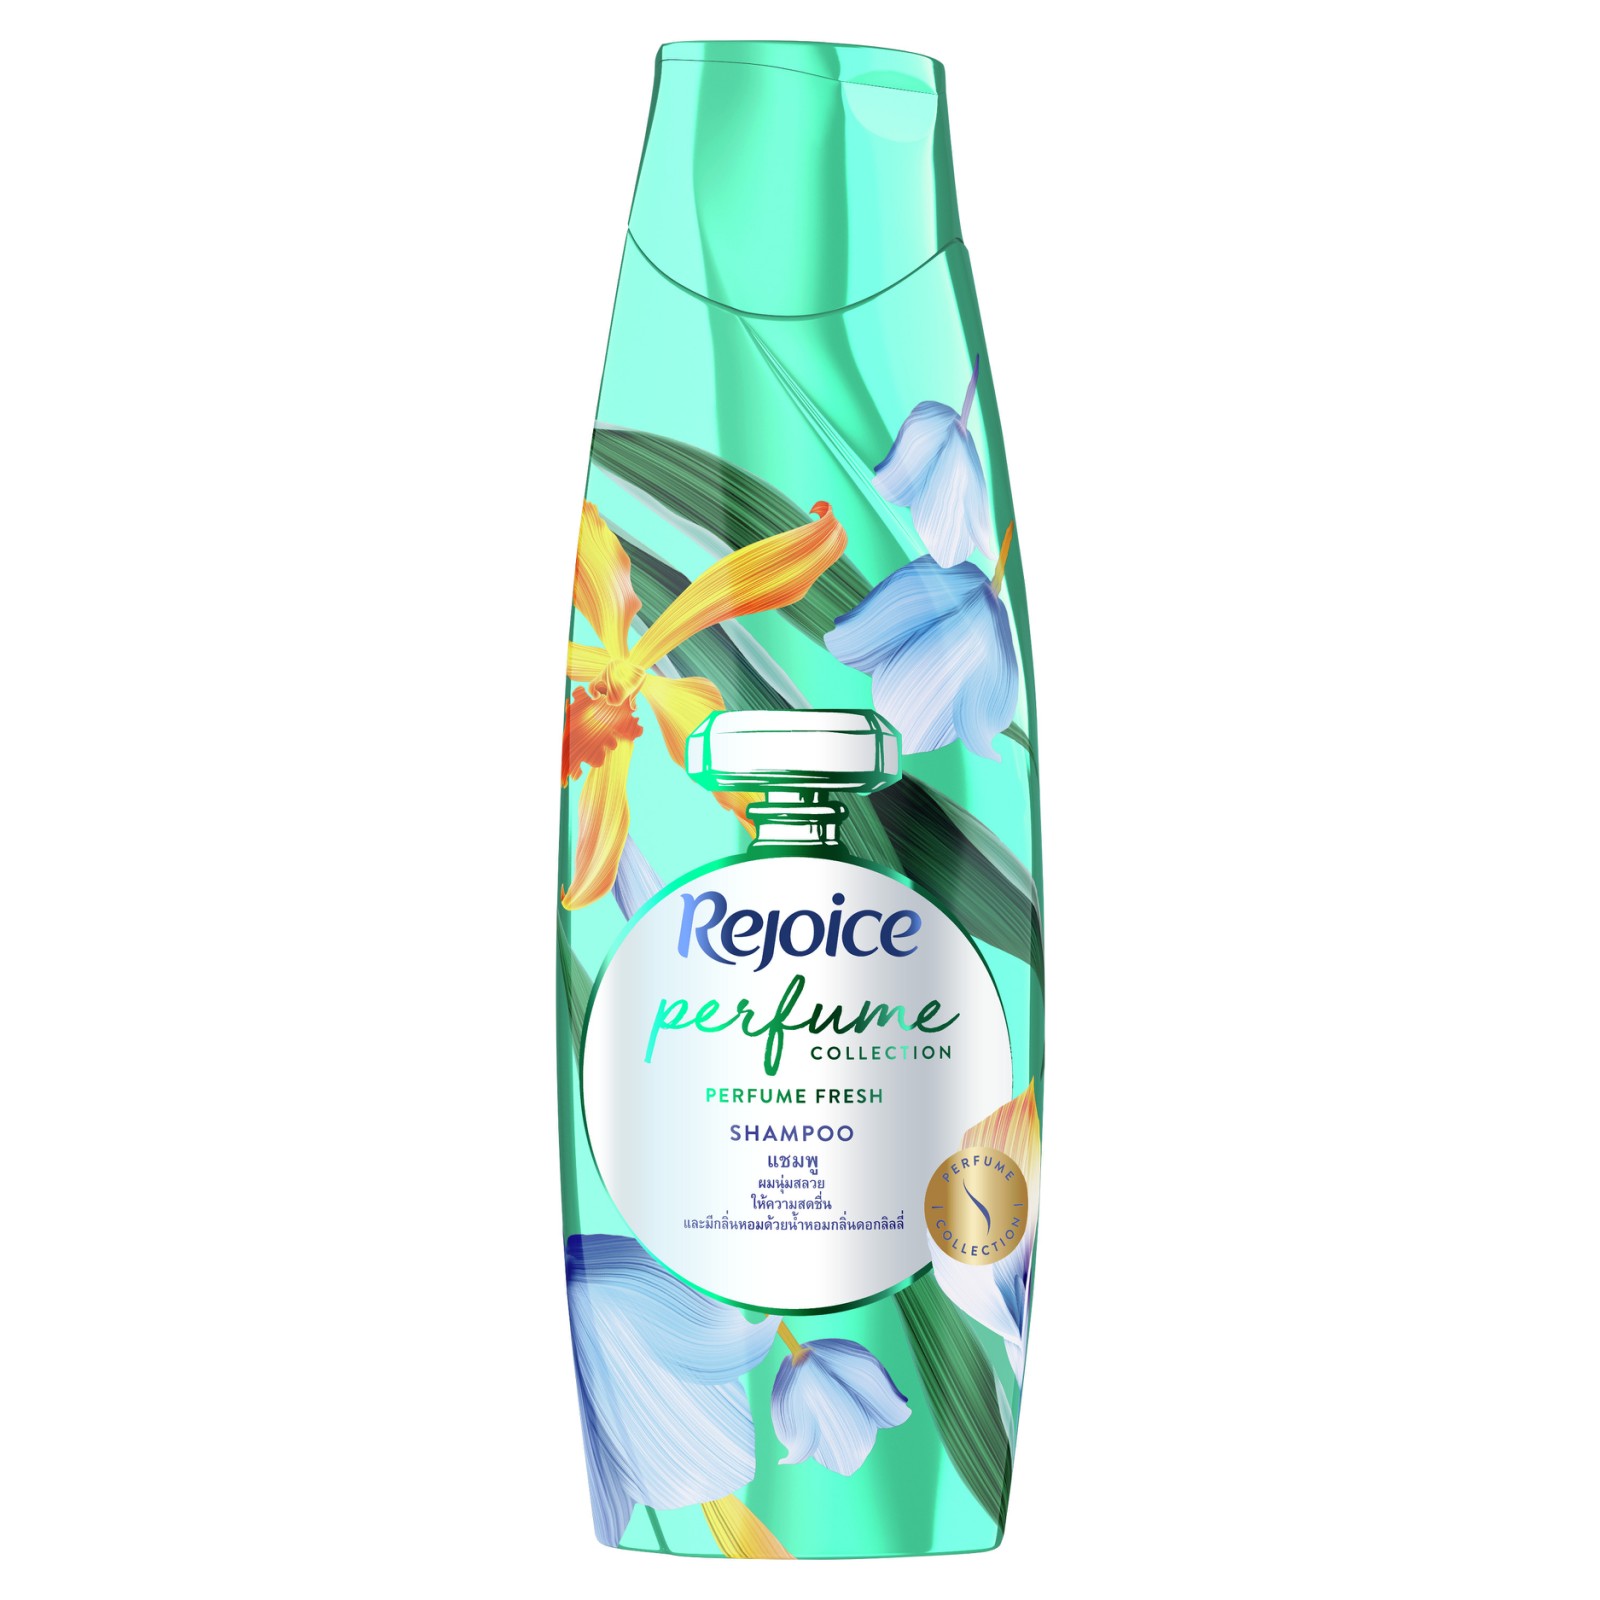 Rejoice Perfume Fresh Shampoo 170ml